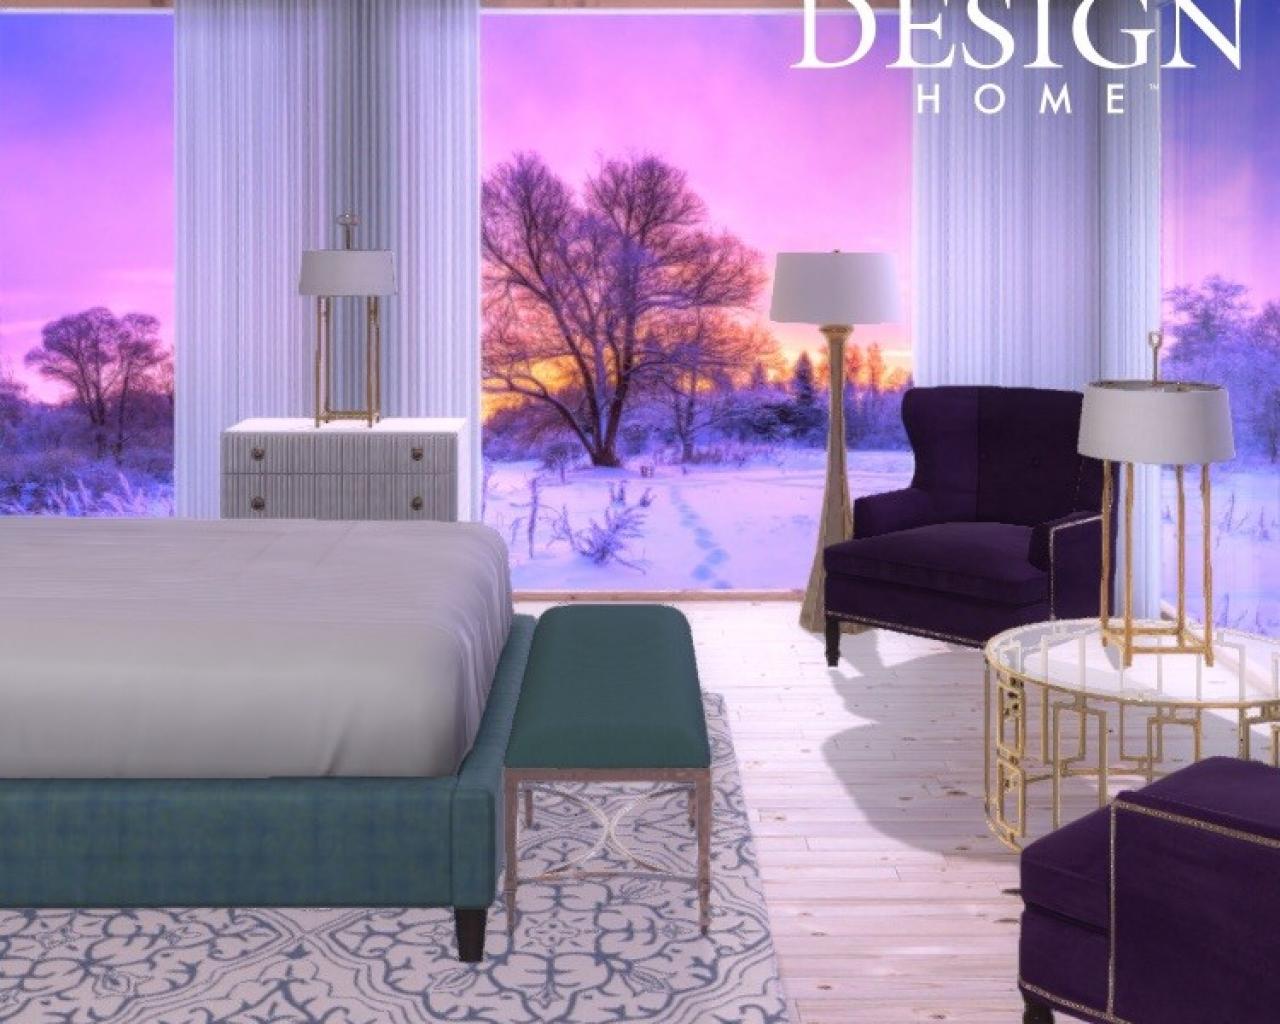 Be an Interior Designer With Design Home App | HGTV's ...